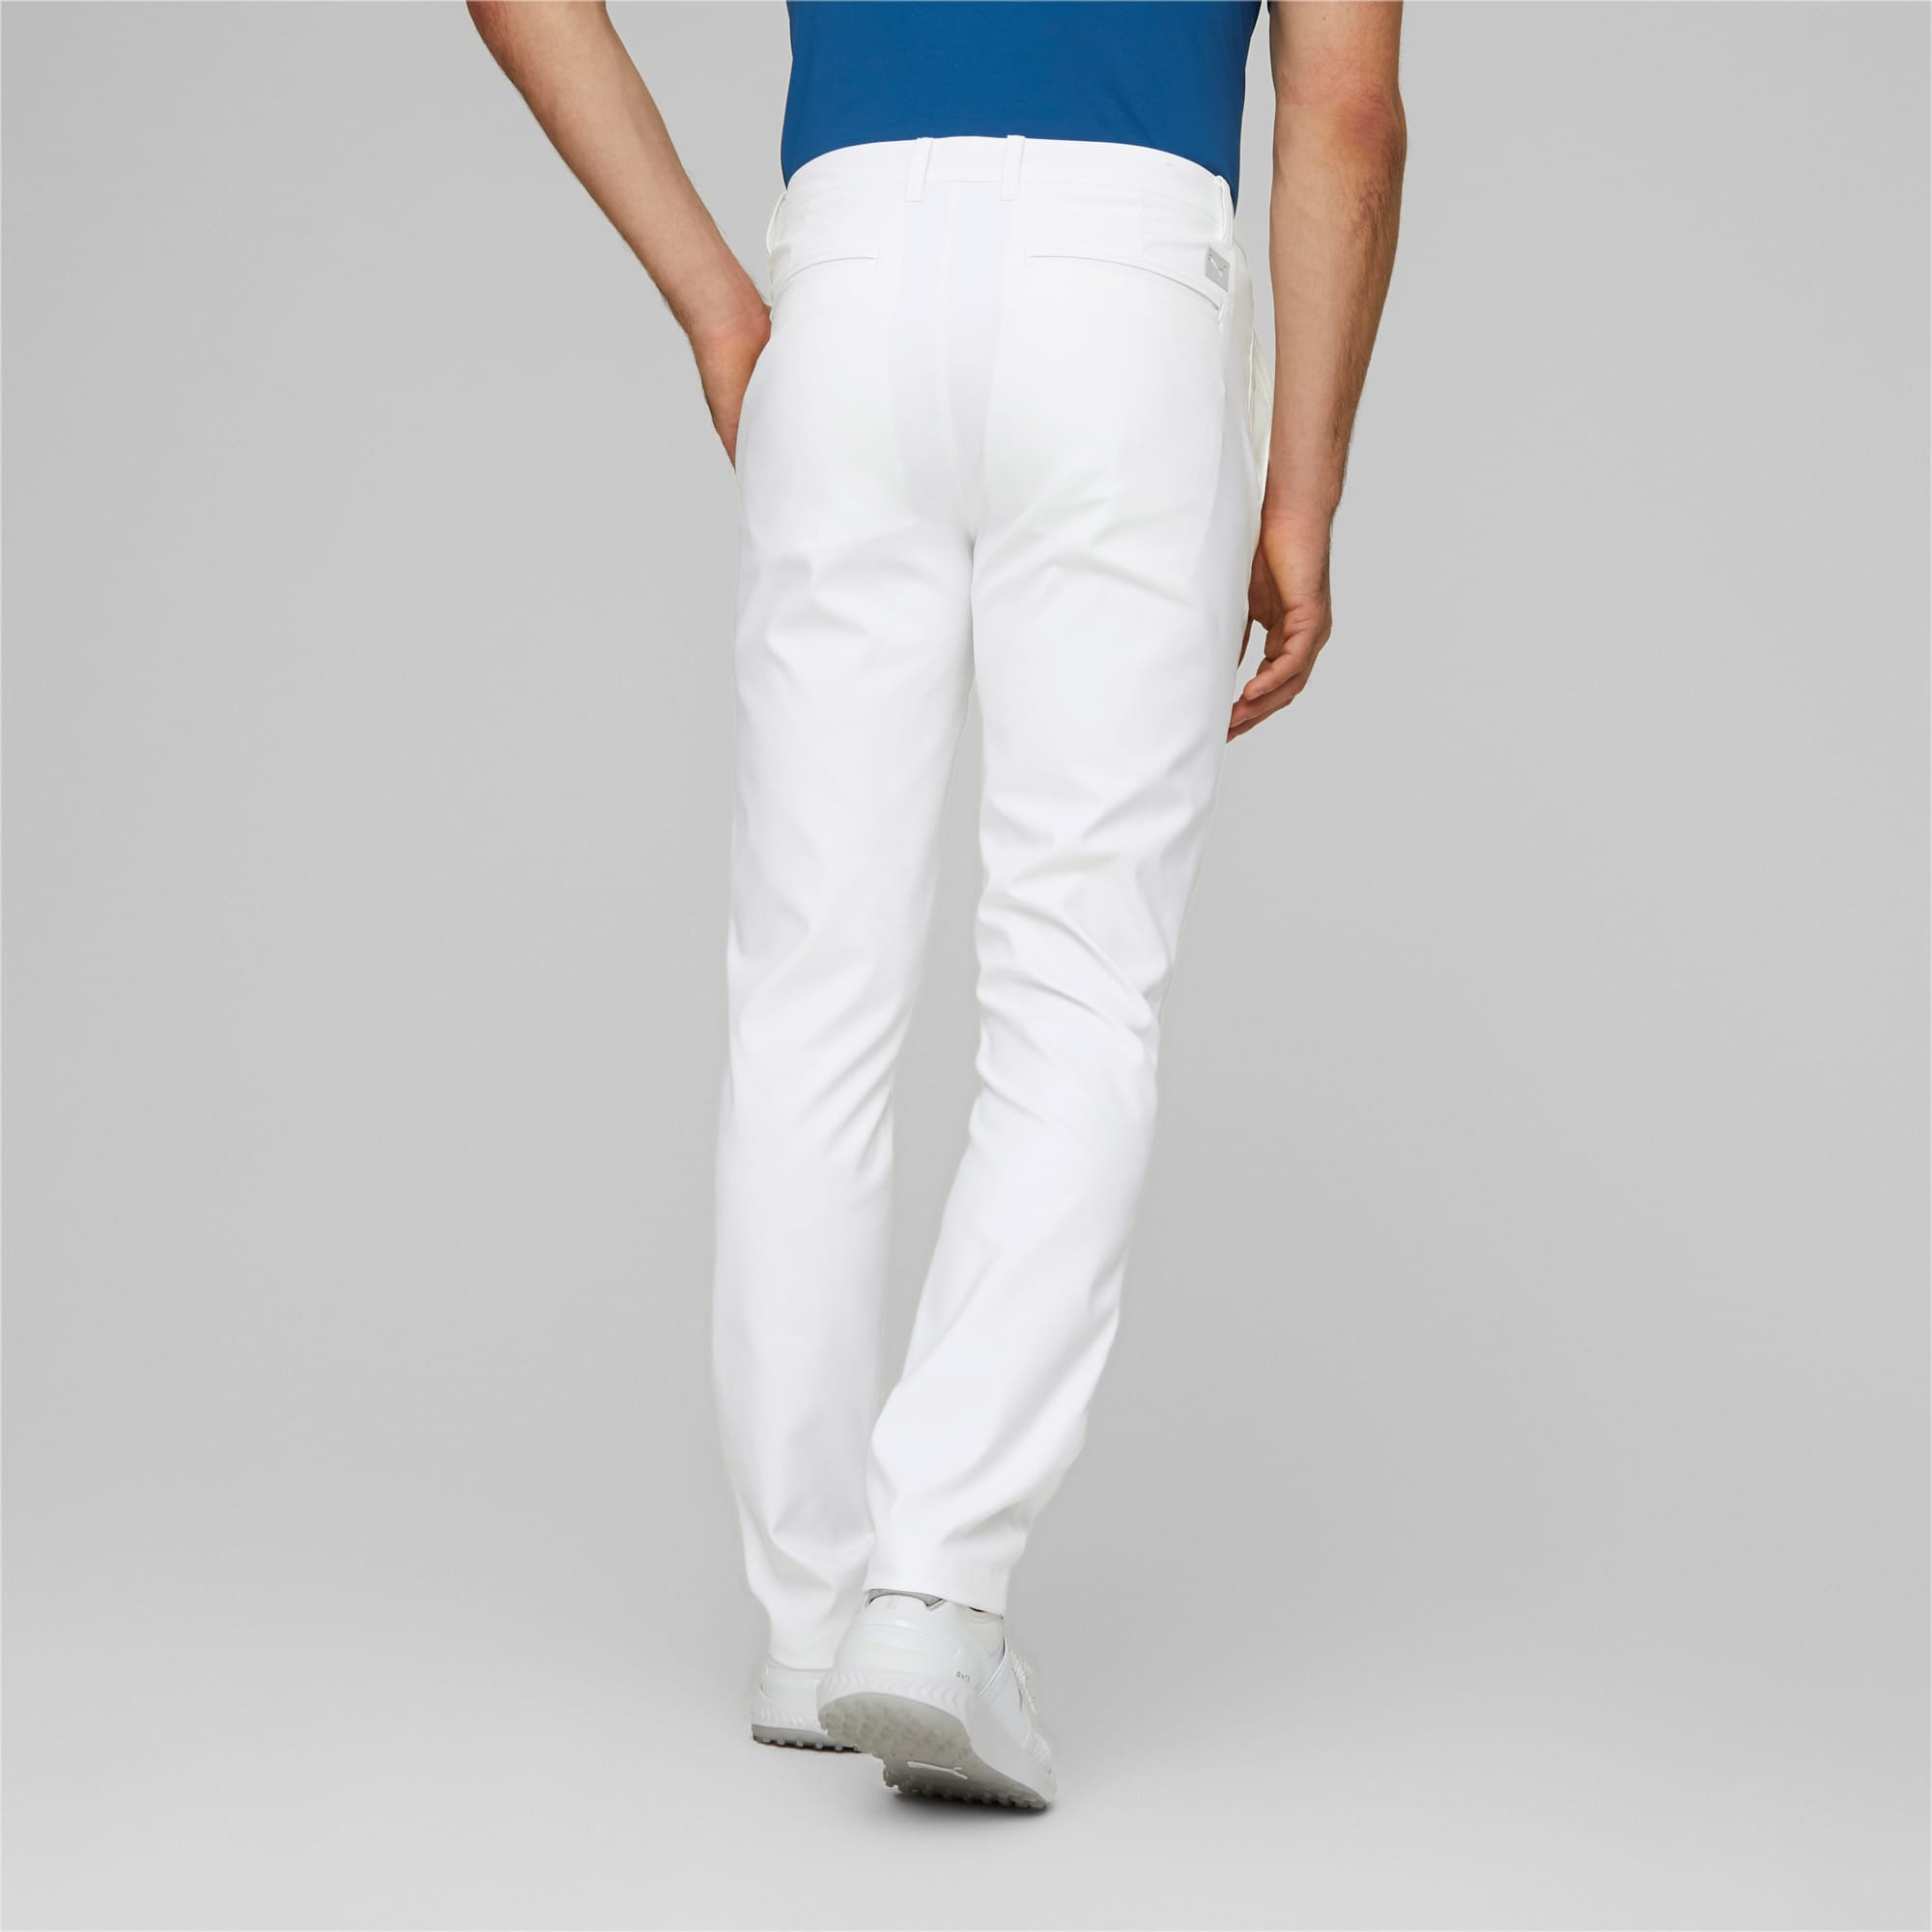 PUMA Dealer Tailored Golf Pants Men, White Glow, Size 31/34, Clothing